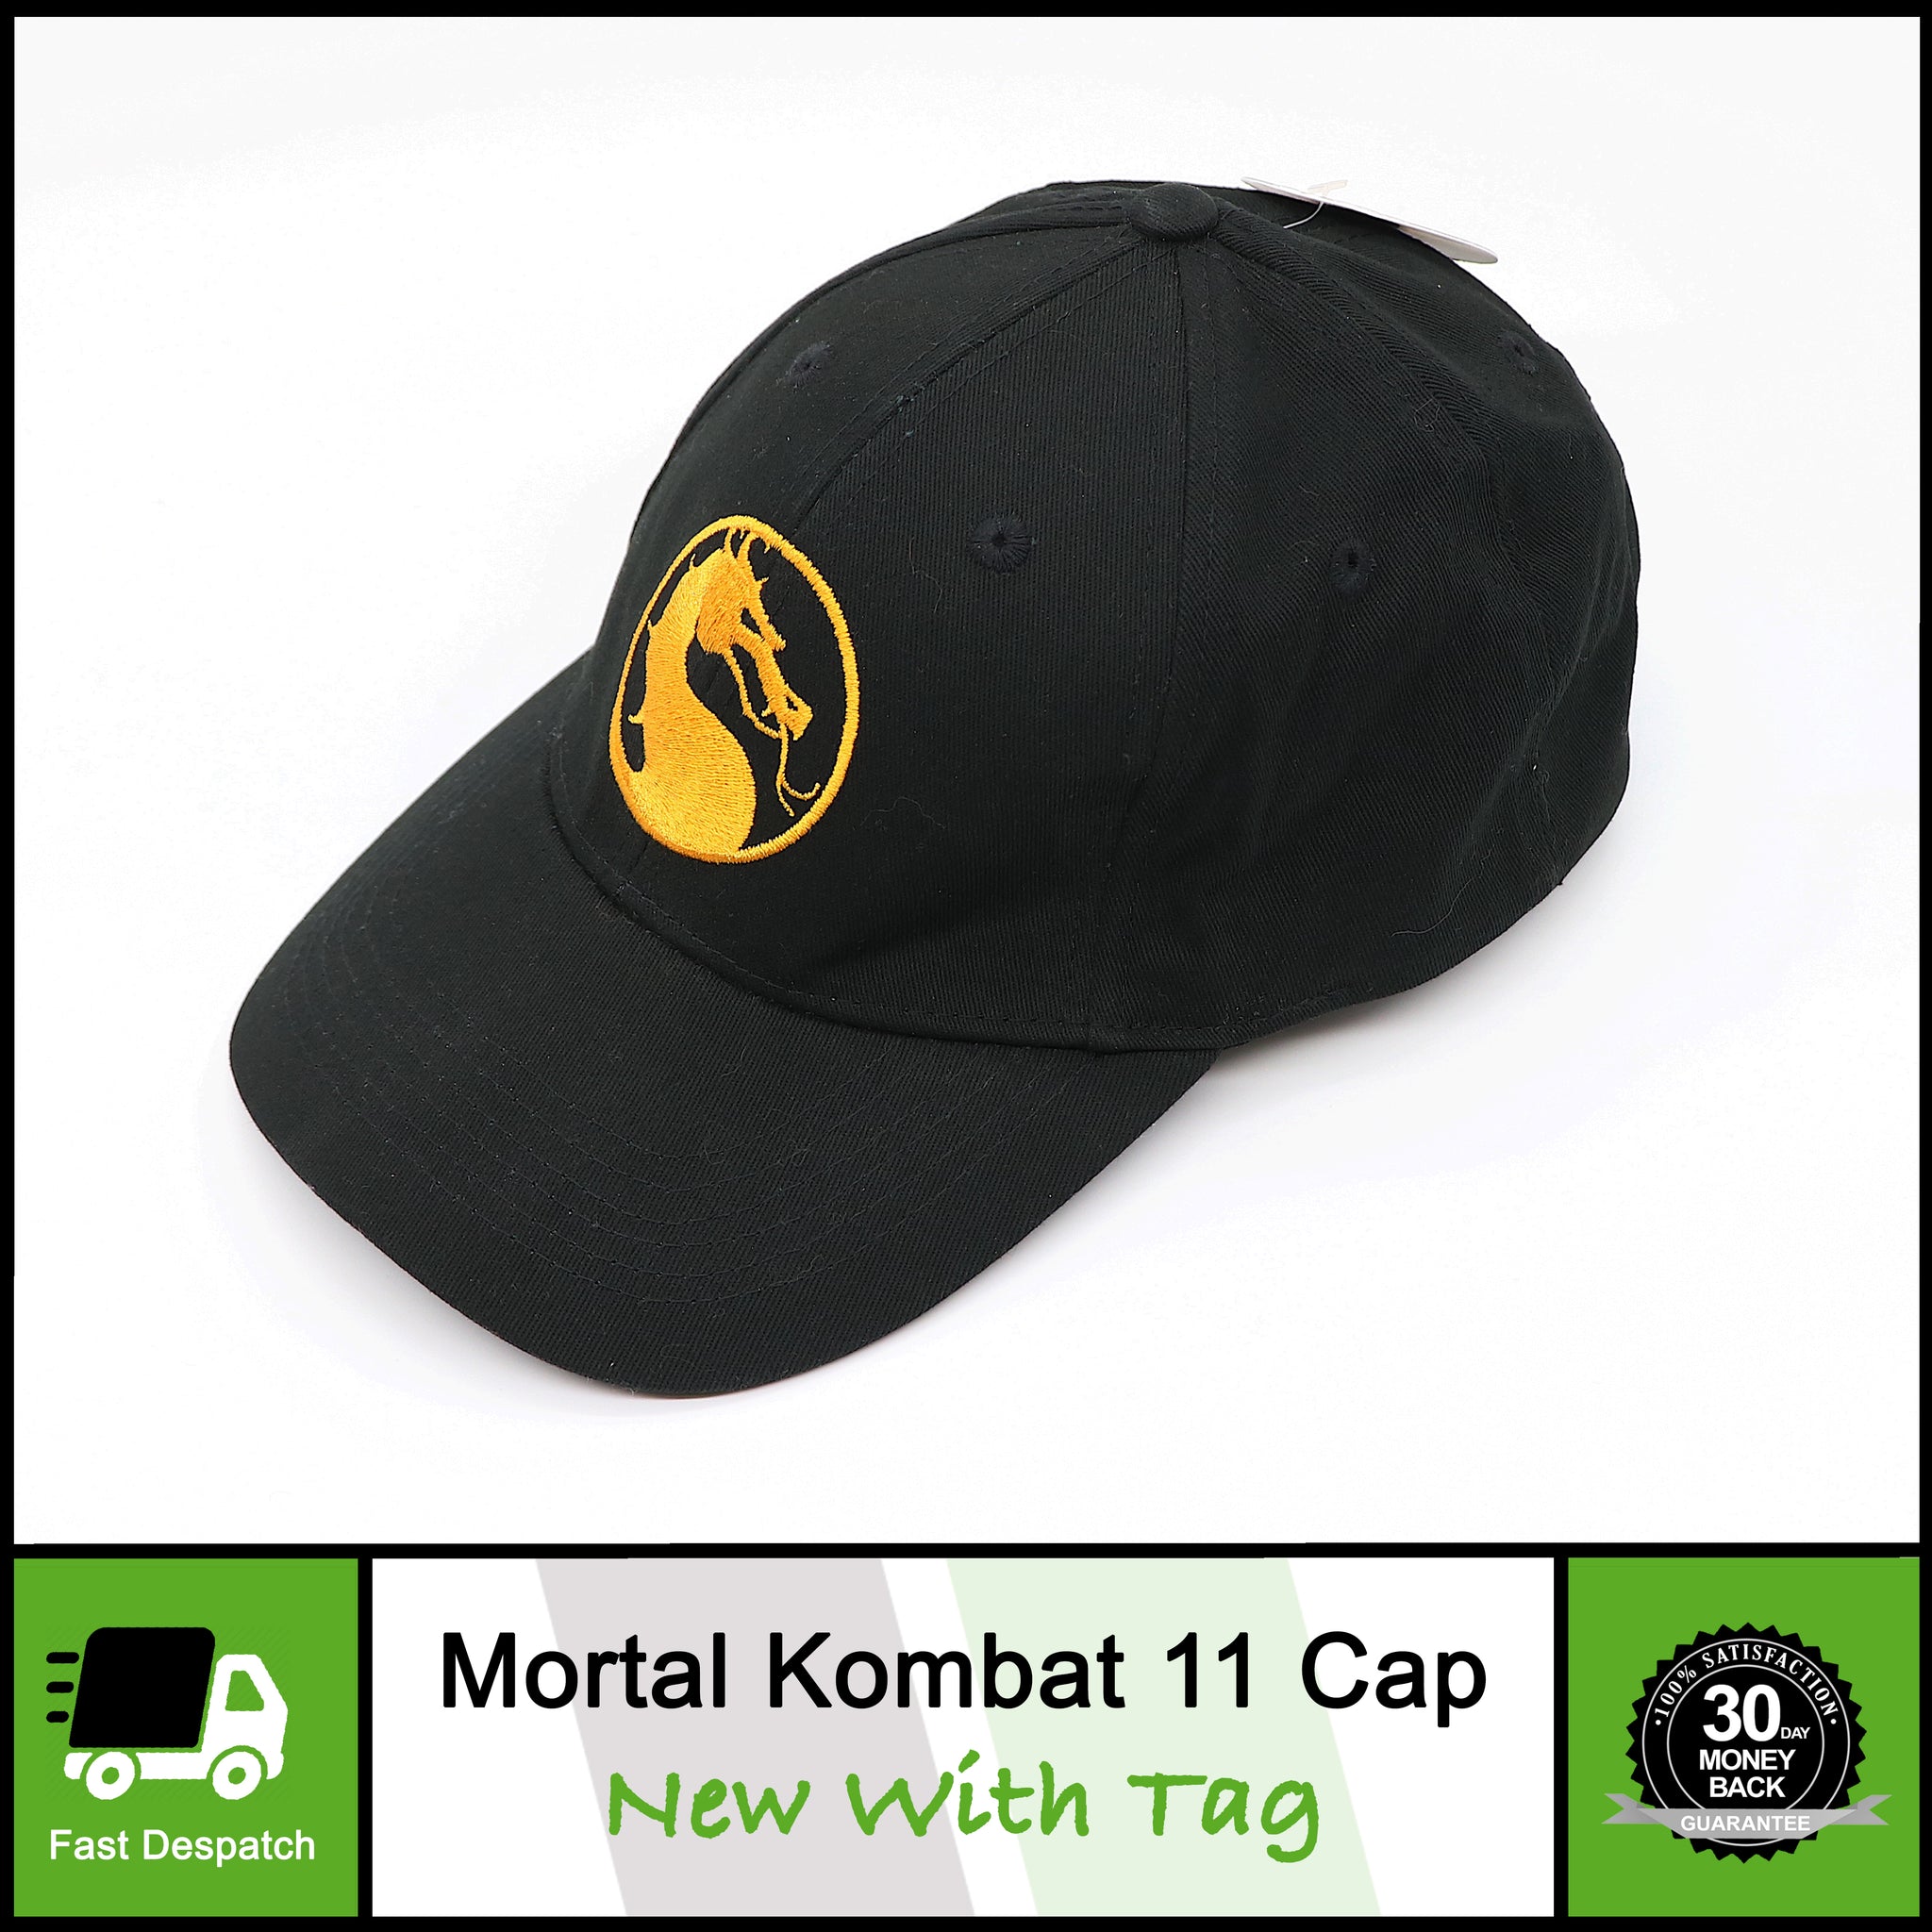 Mortal Kombat 11 Hat Cap Promo Prize Giveaway at London Event - Collectors Rare!